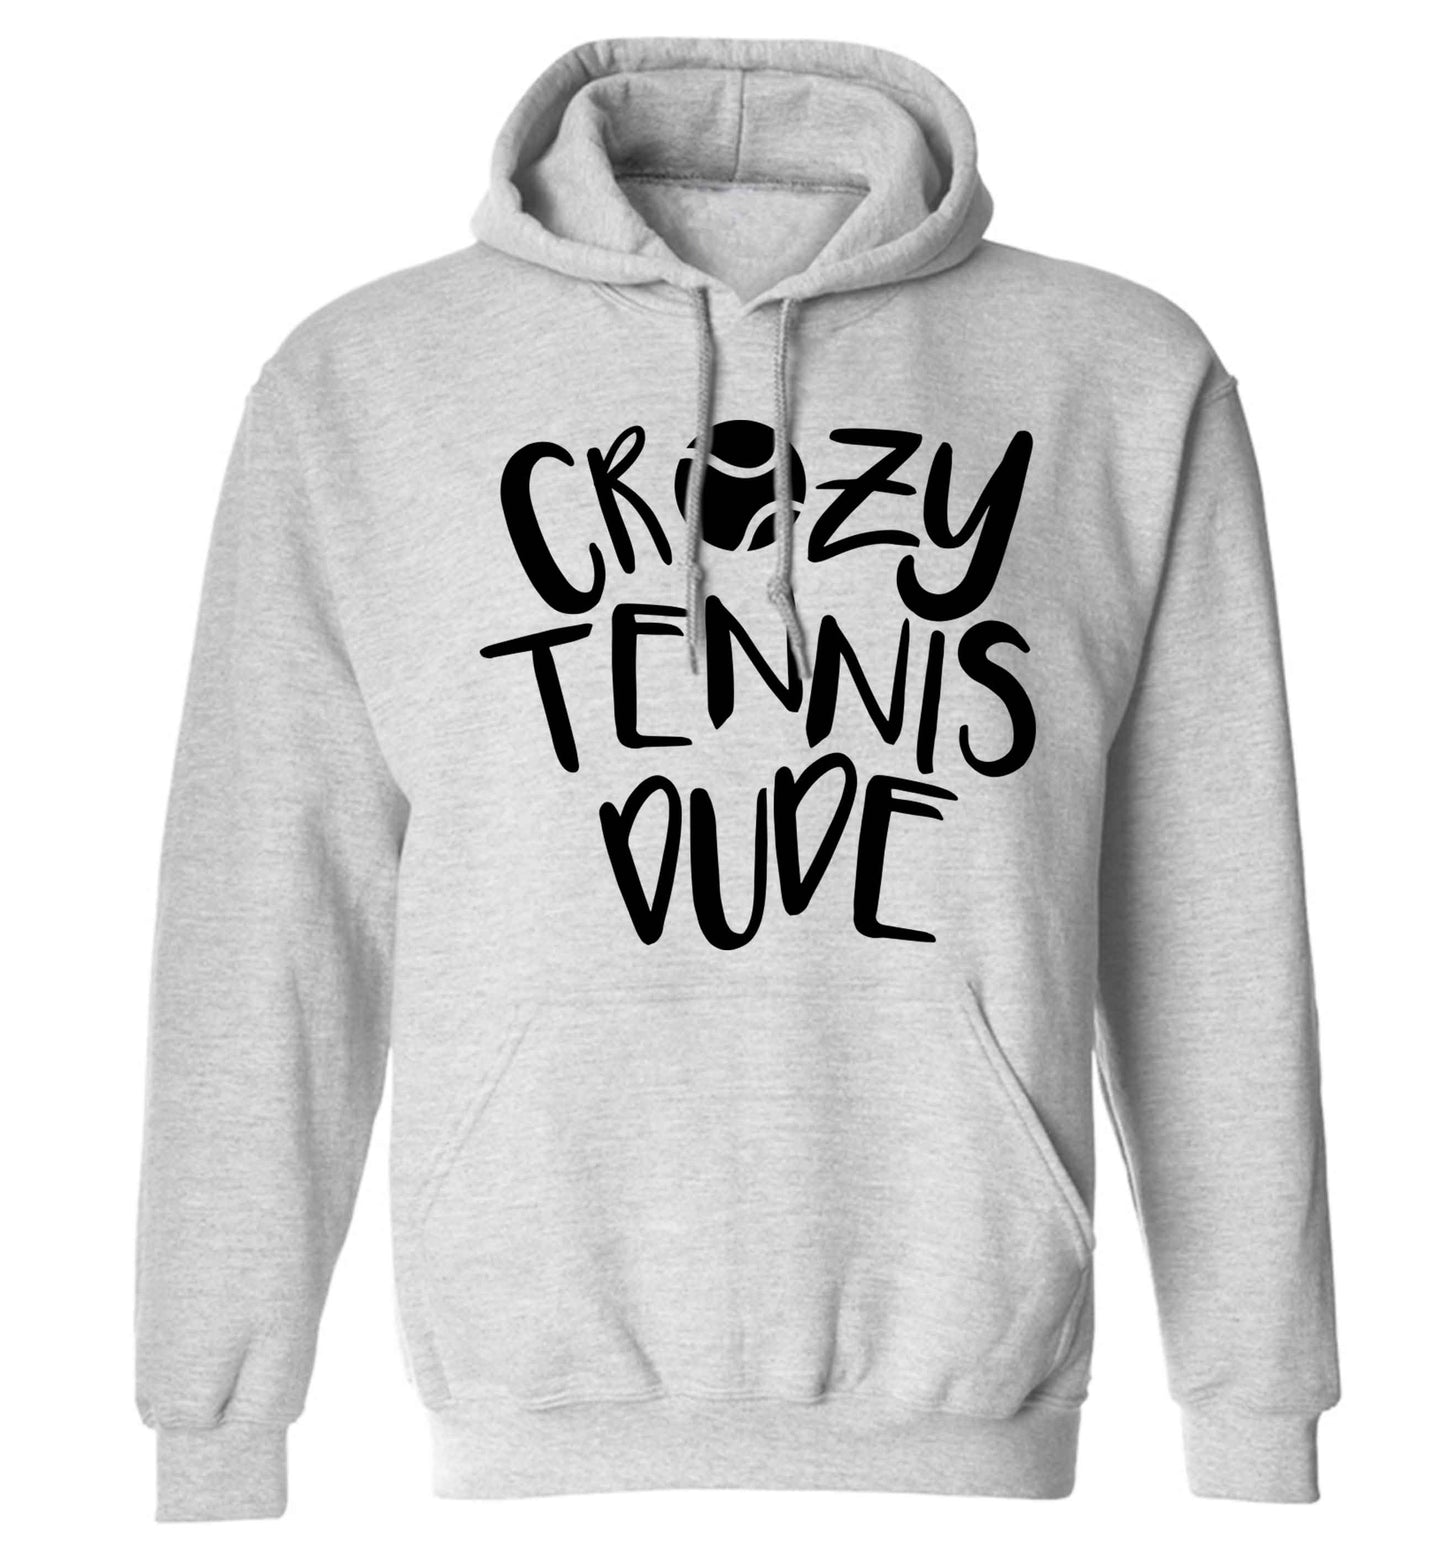 Crazy tennis dude adults unisex grey hoodie 2XL